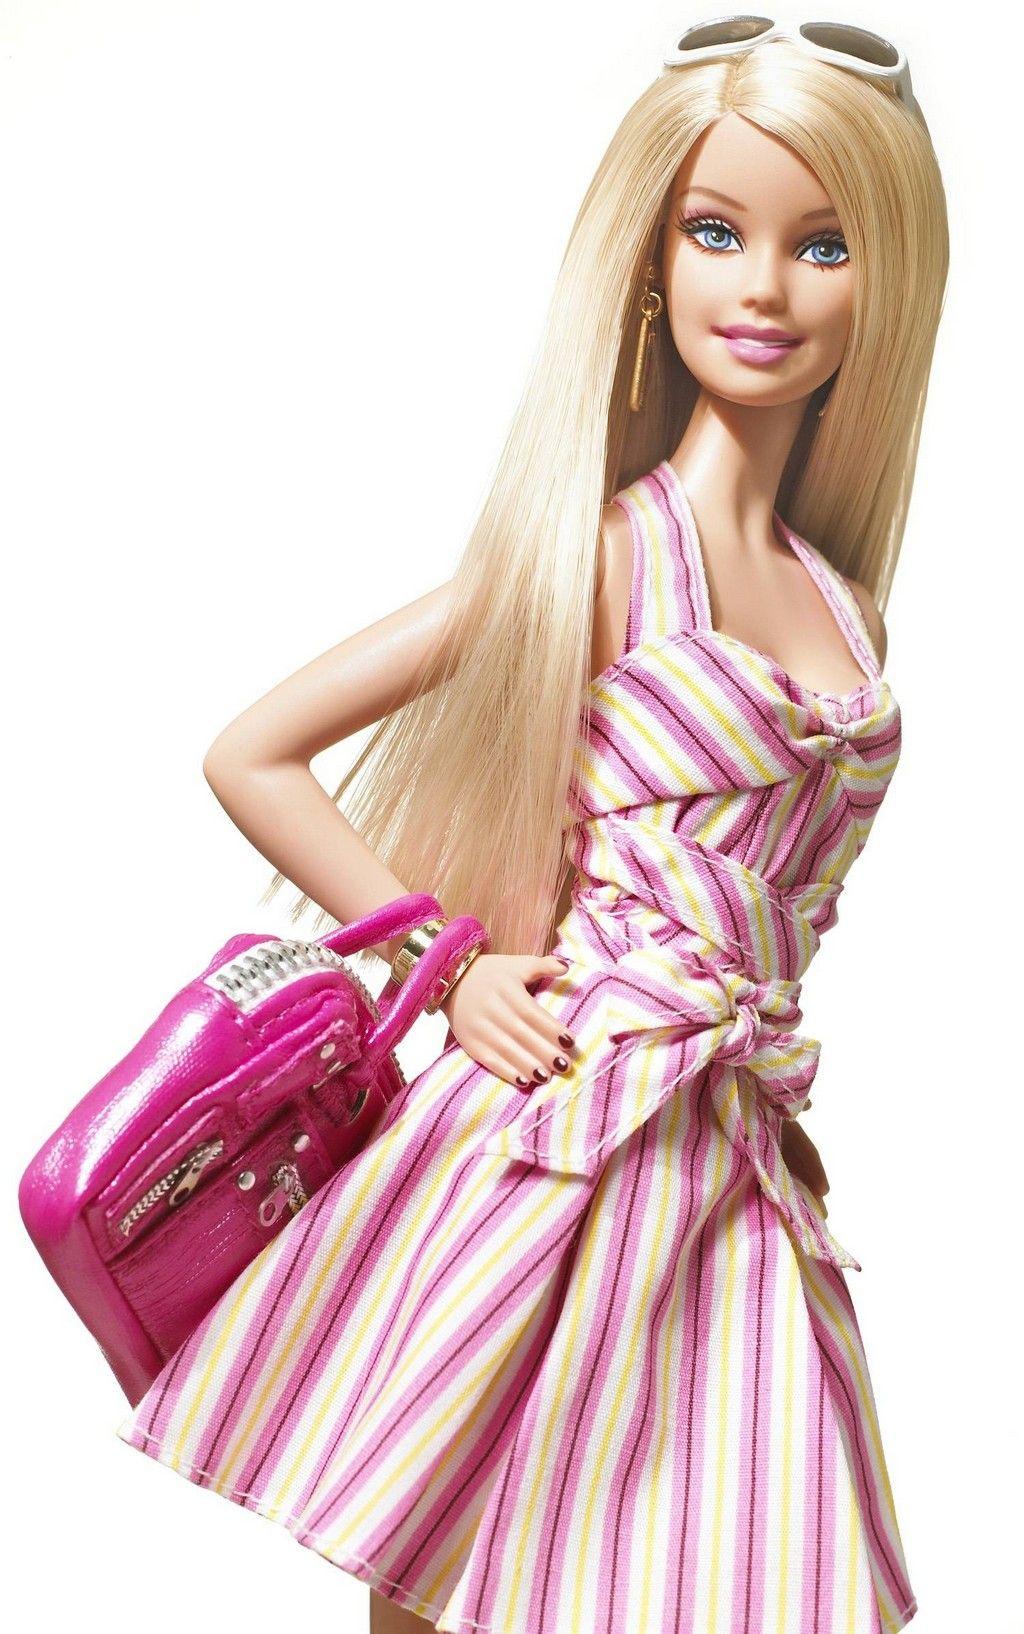 Barbie Doll Face Wallpaper Cake Princess House Image Body Girl PIcs